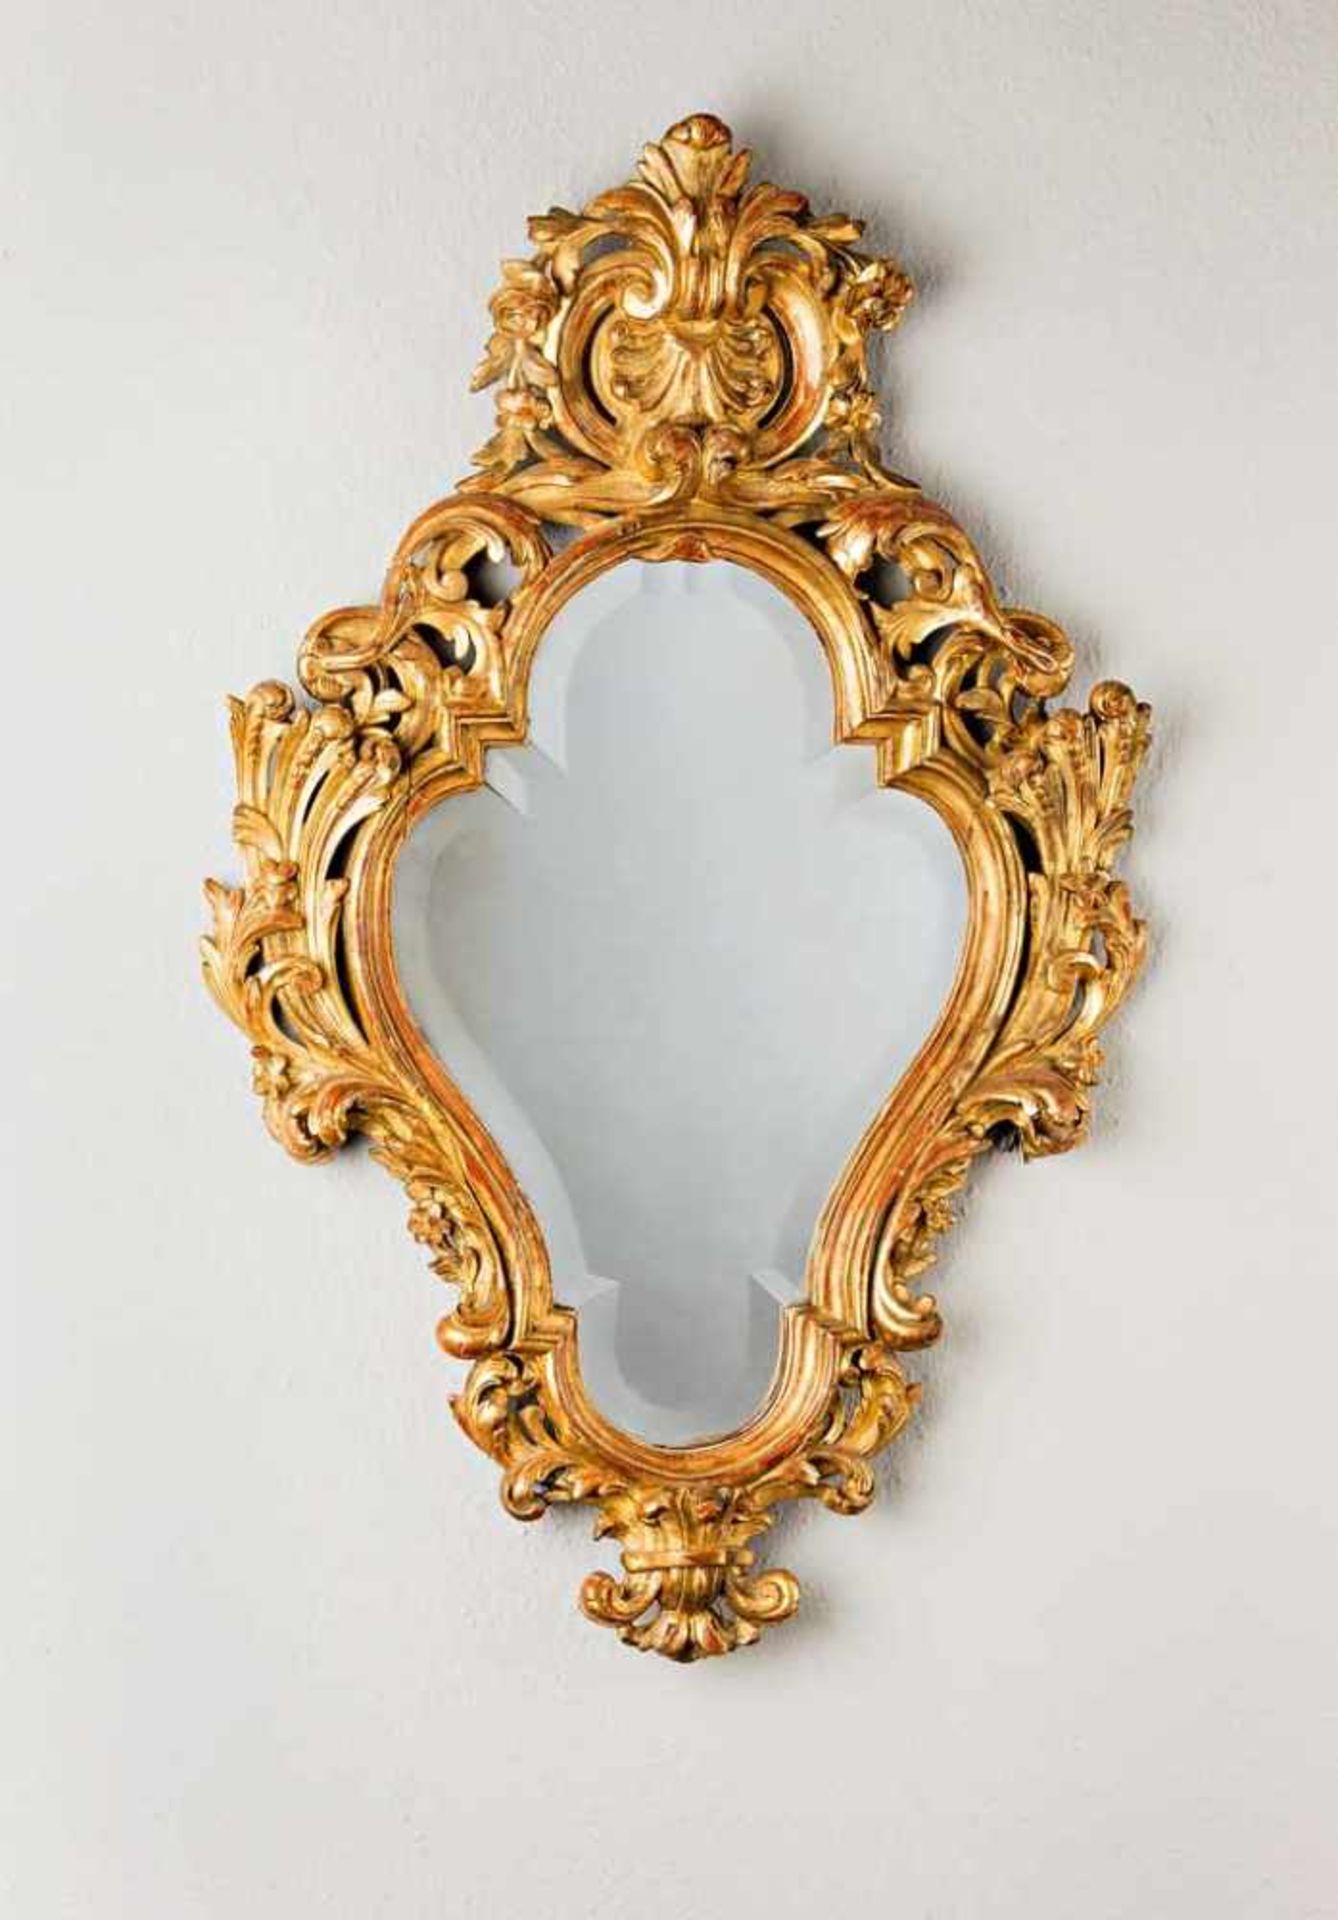 Spiegel im venezianischen Rokokostil. Vergoldet. 19./20. Jh. 100 x 62 cm